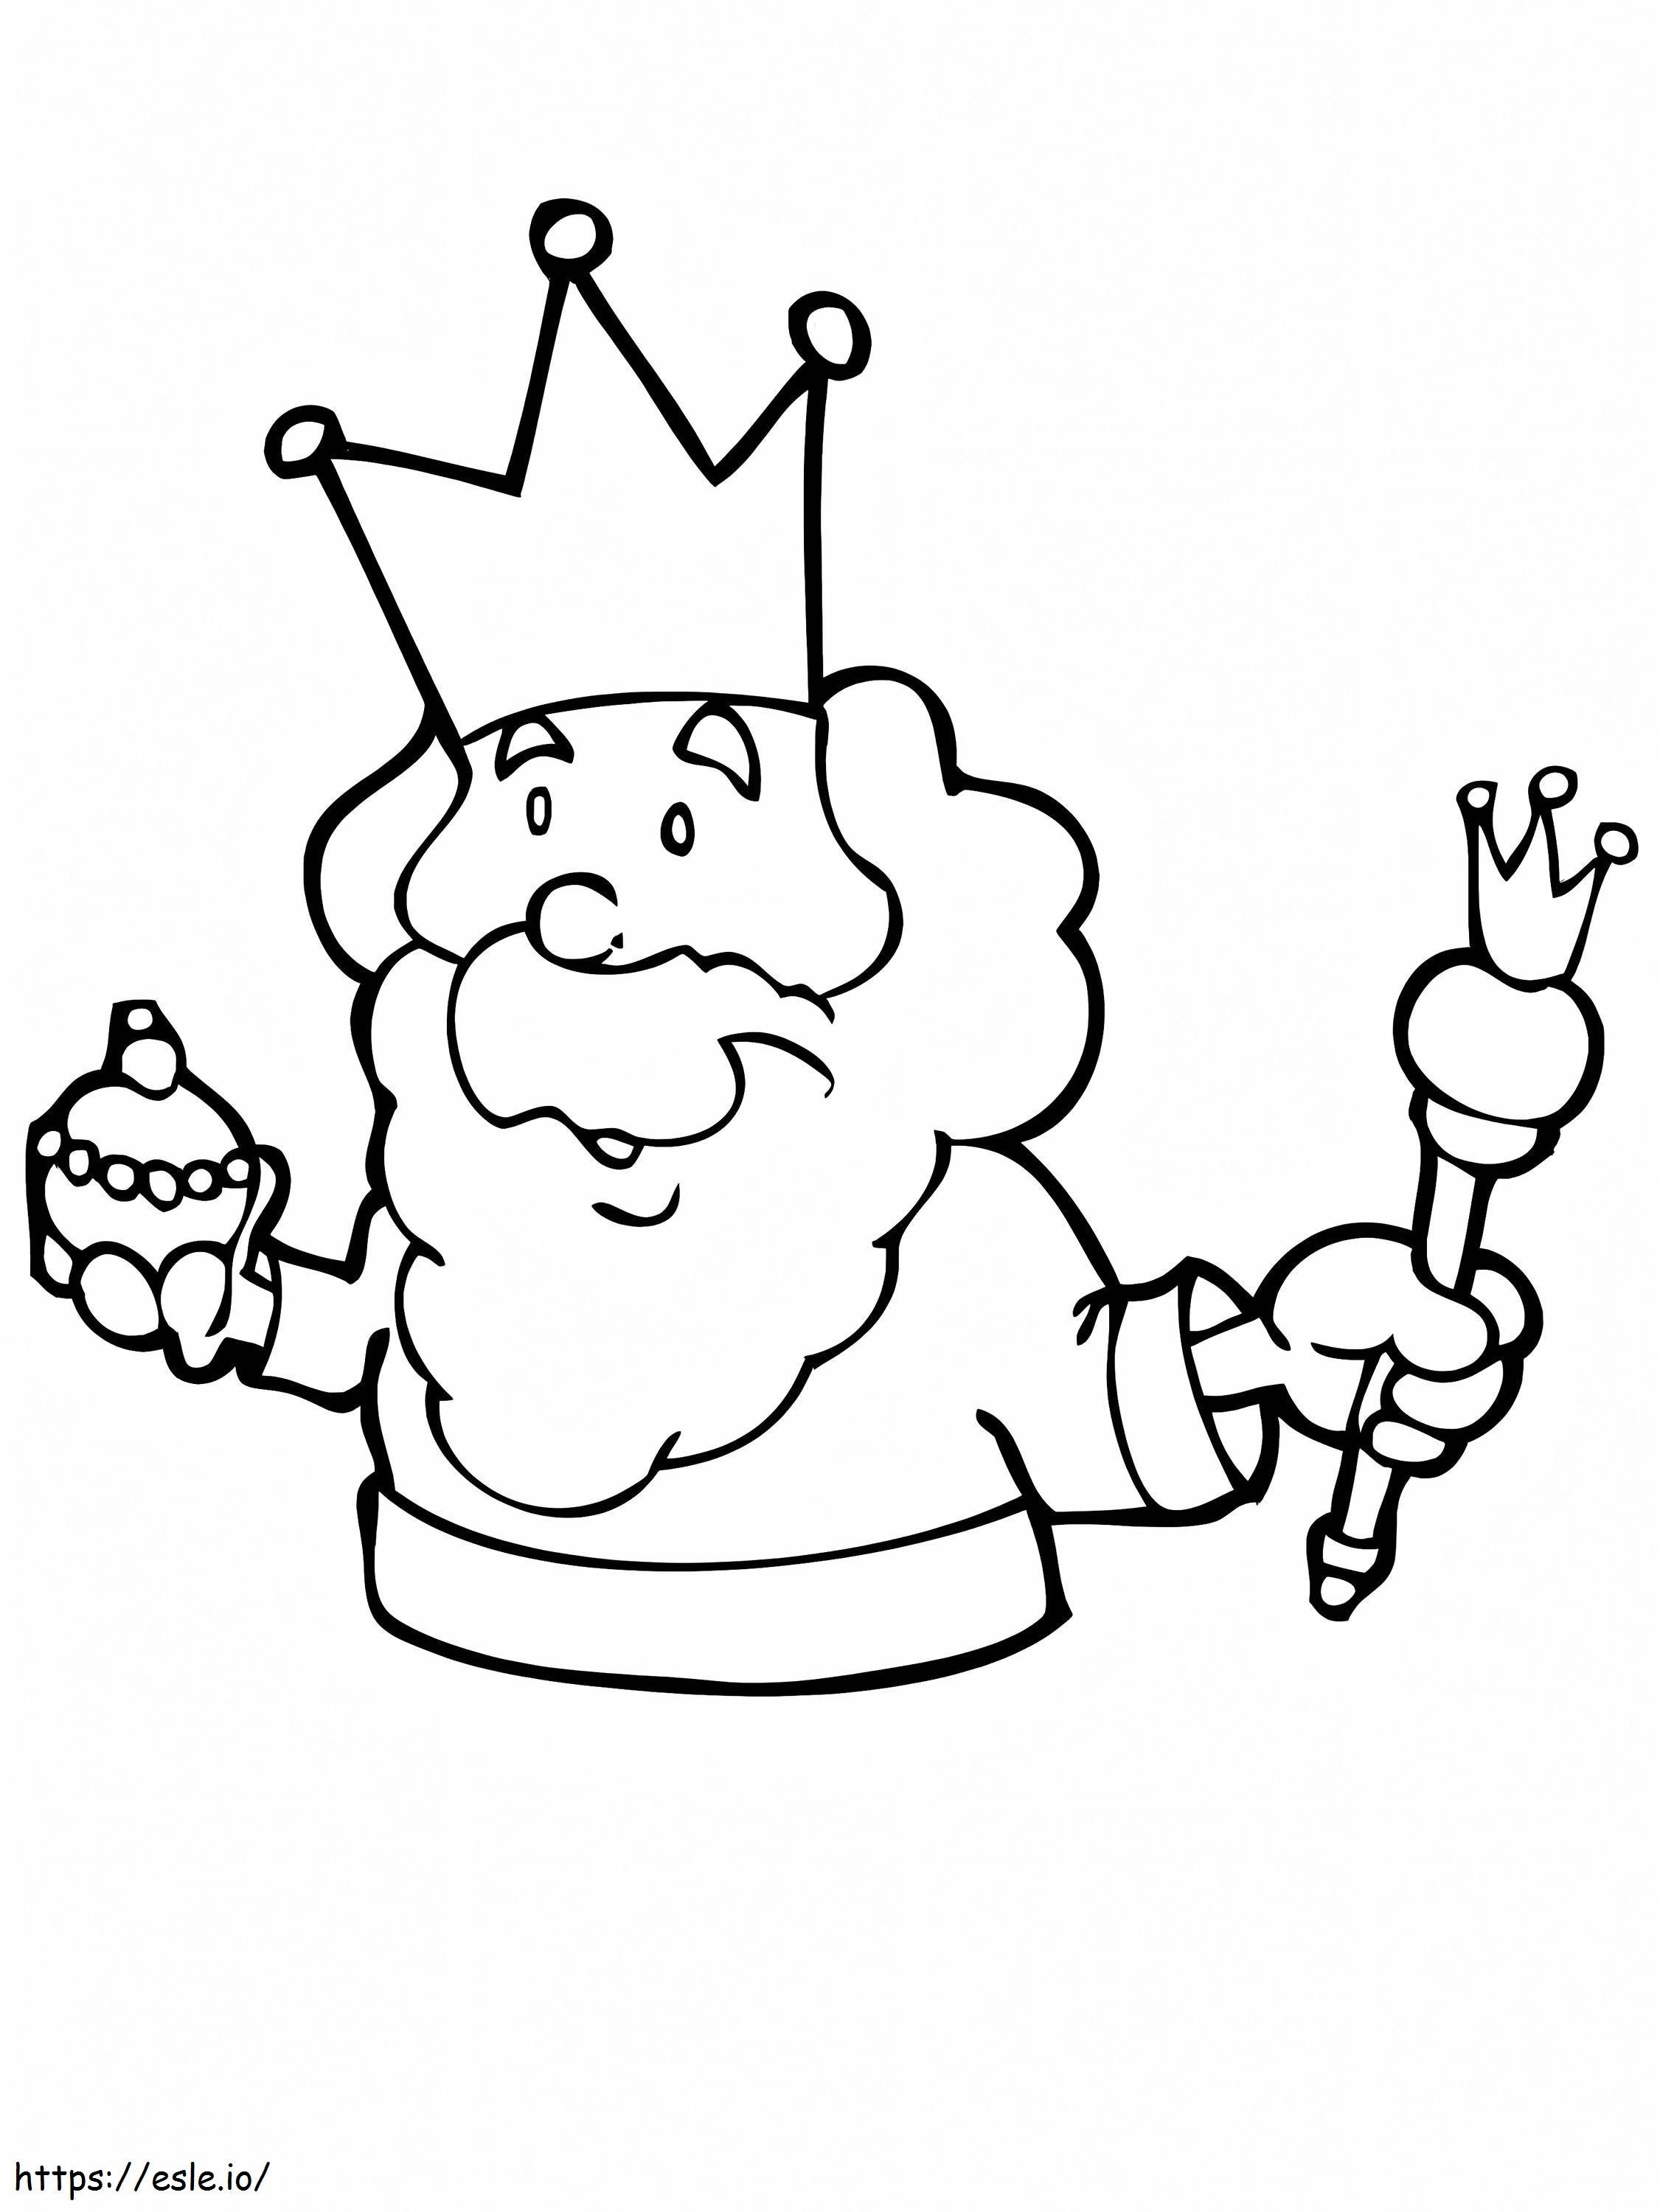 King's Holding Cupcake de colorat